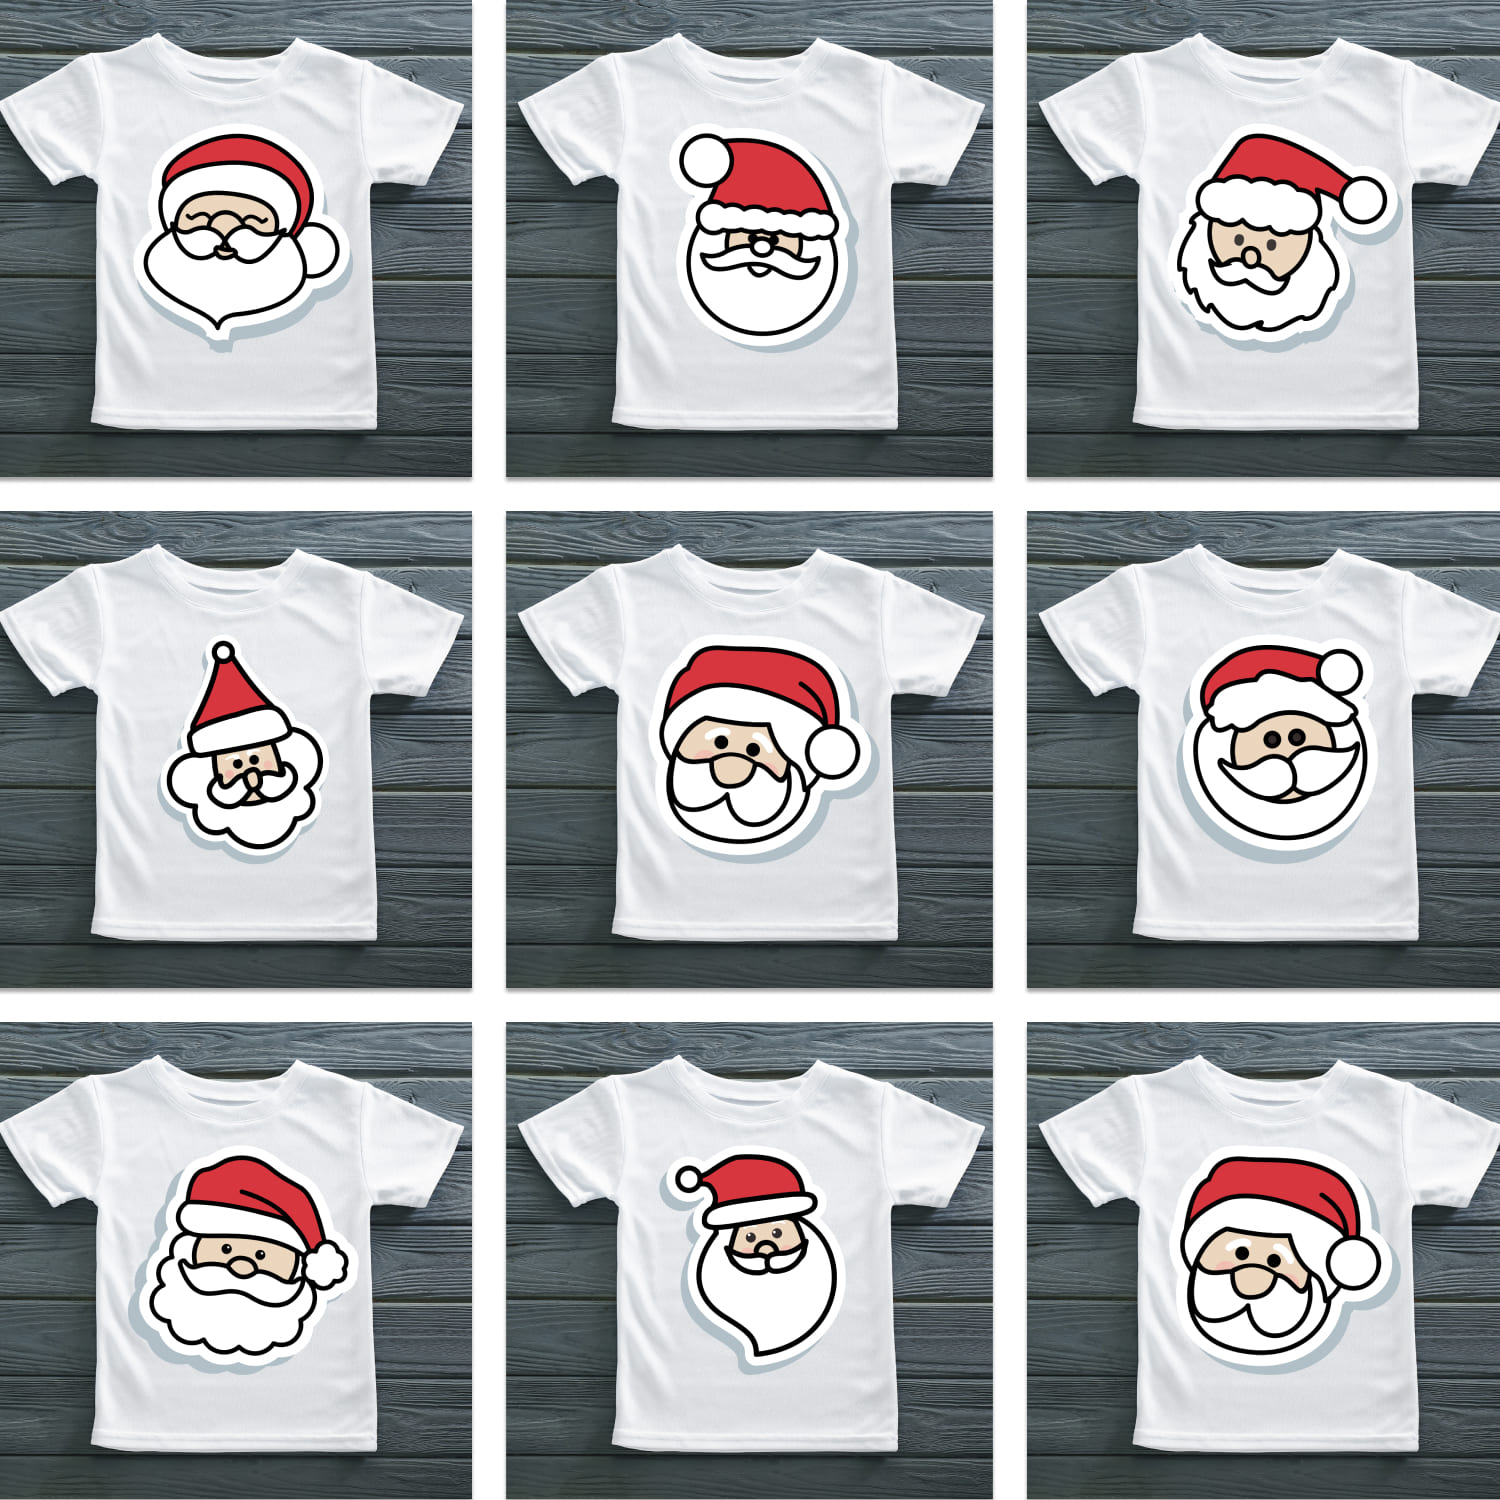 Santa Face SVG T-shirt Designs cover.